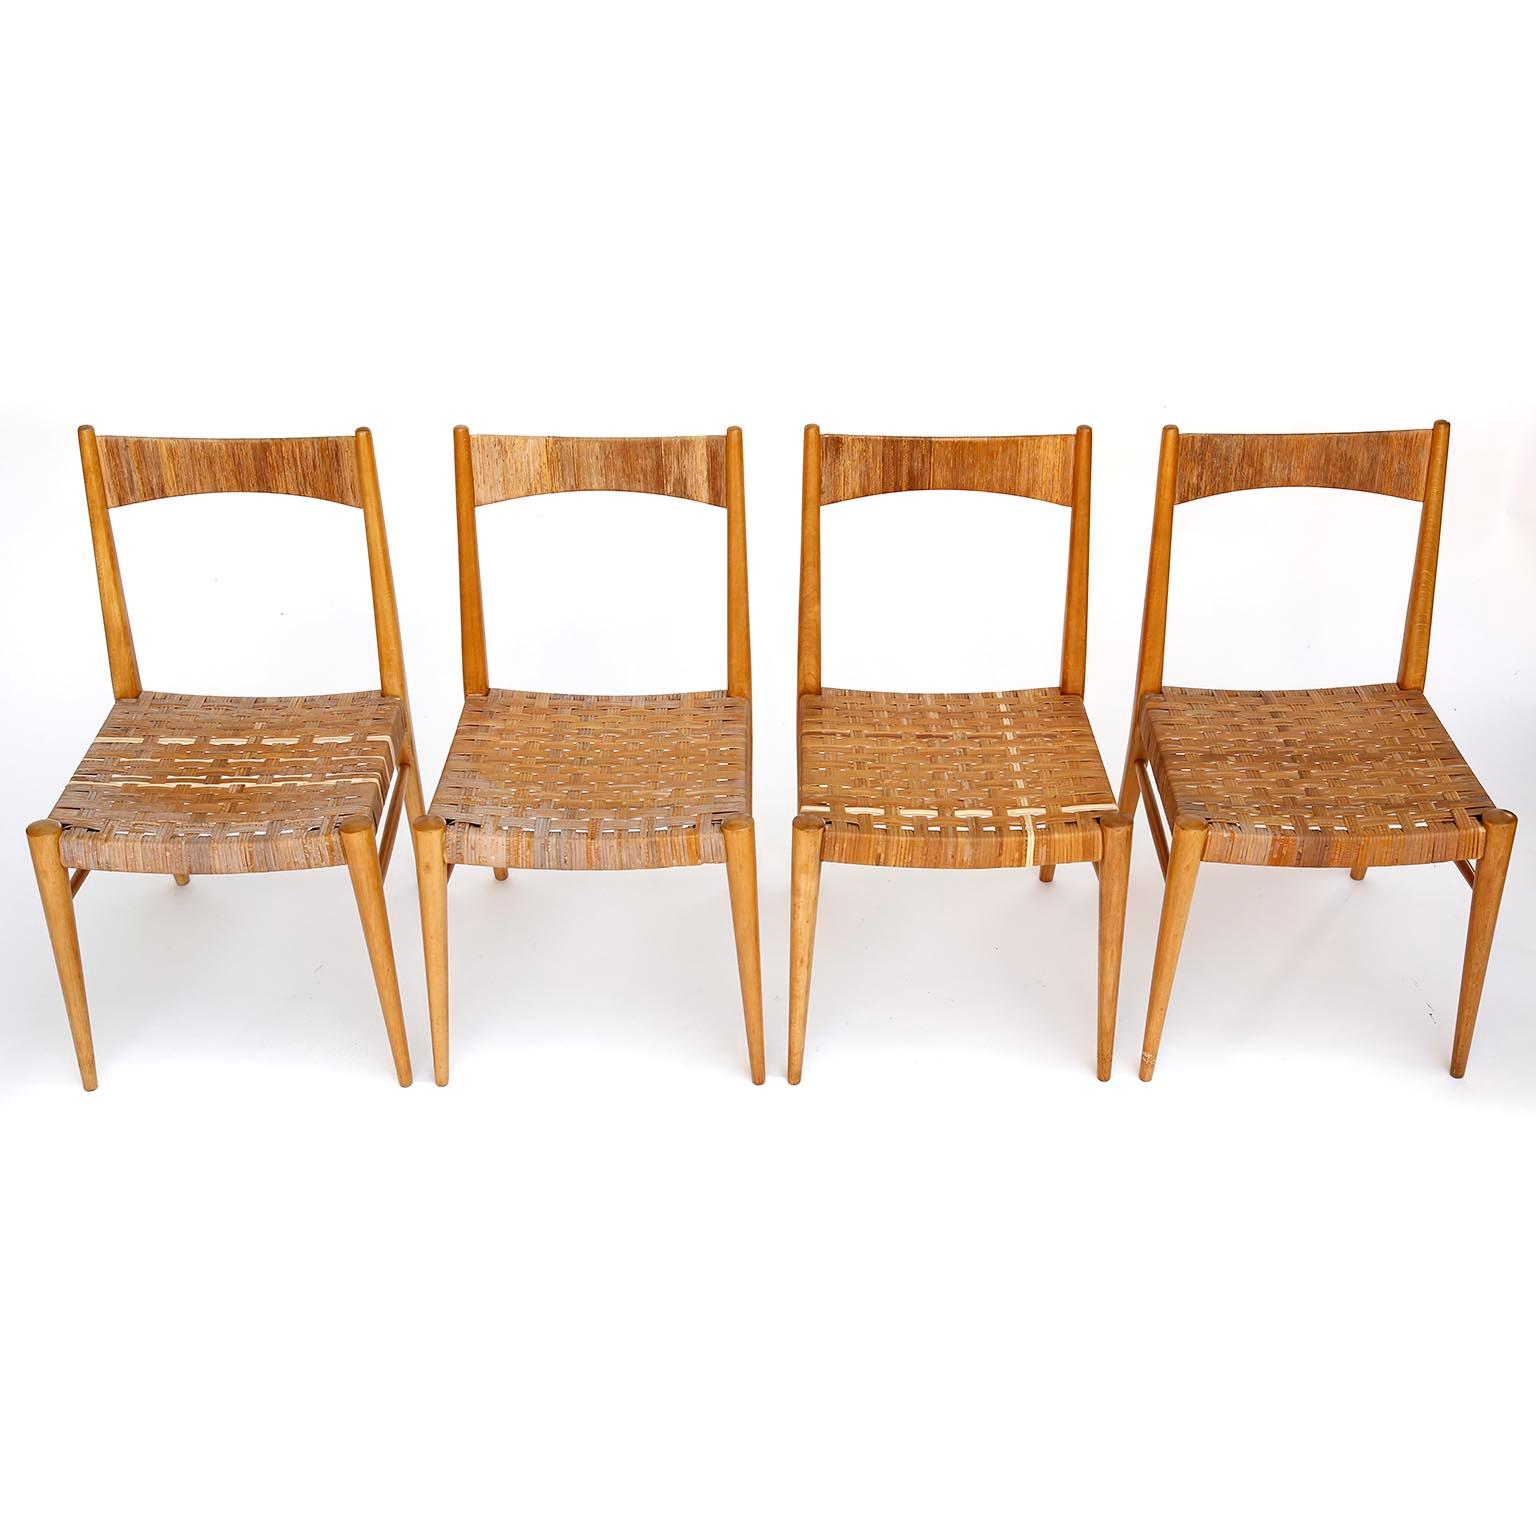 Four Anna-Lülja Praun Chairs, Wood Wicker Cane, 1950s 7